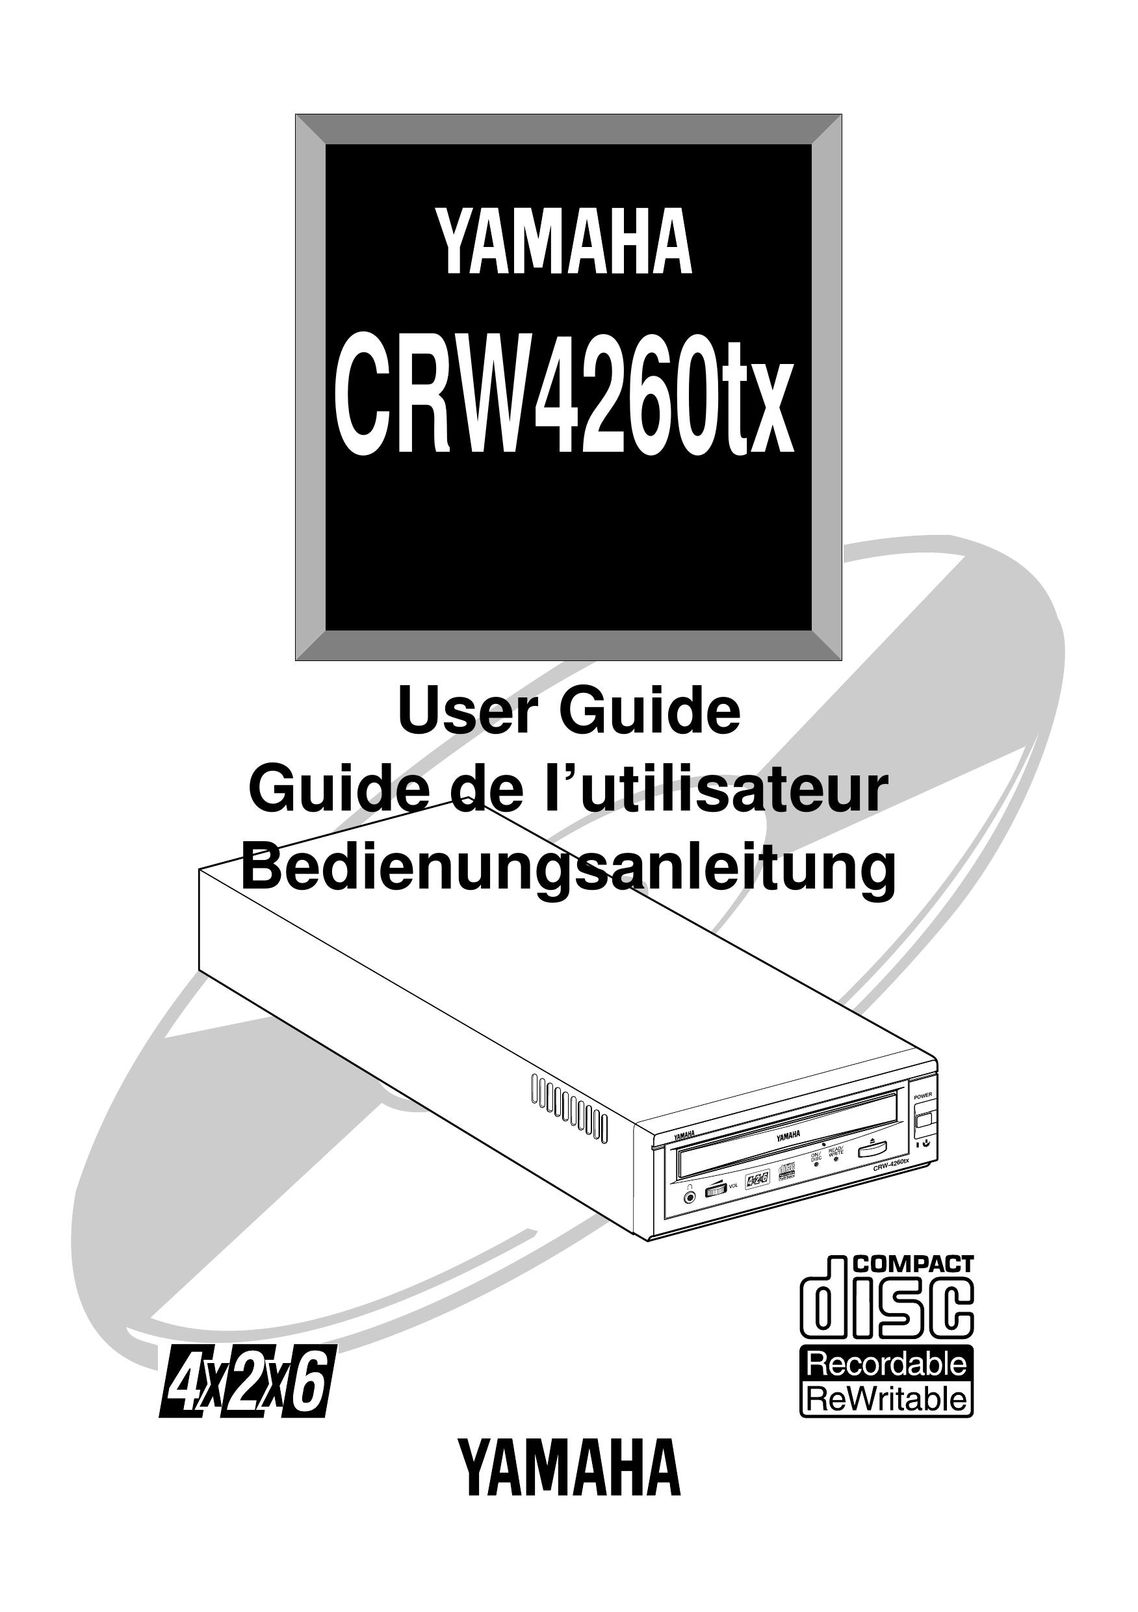 Musica CRW4260tx CD Player User Manual